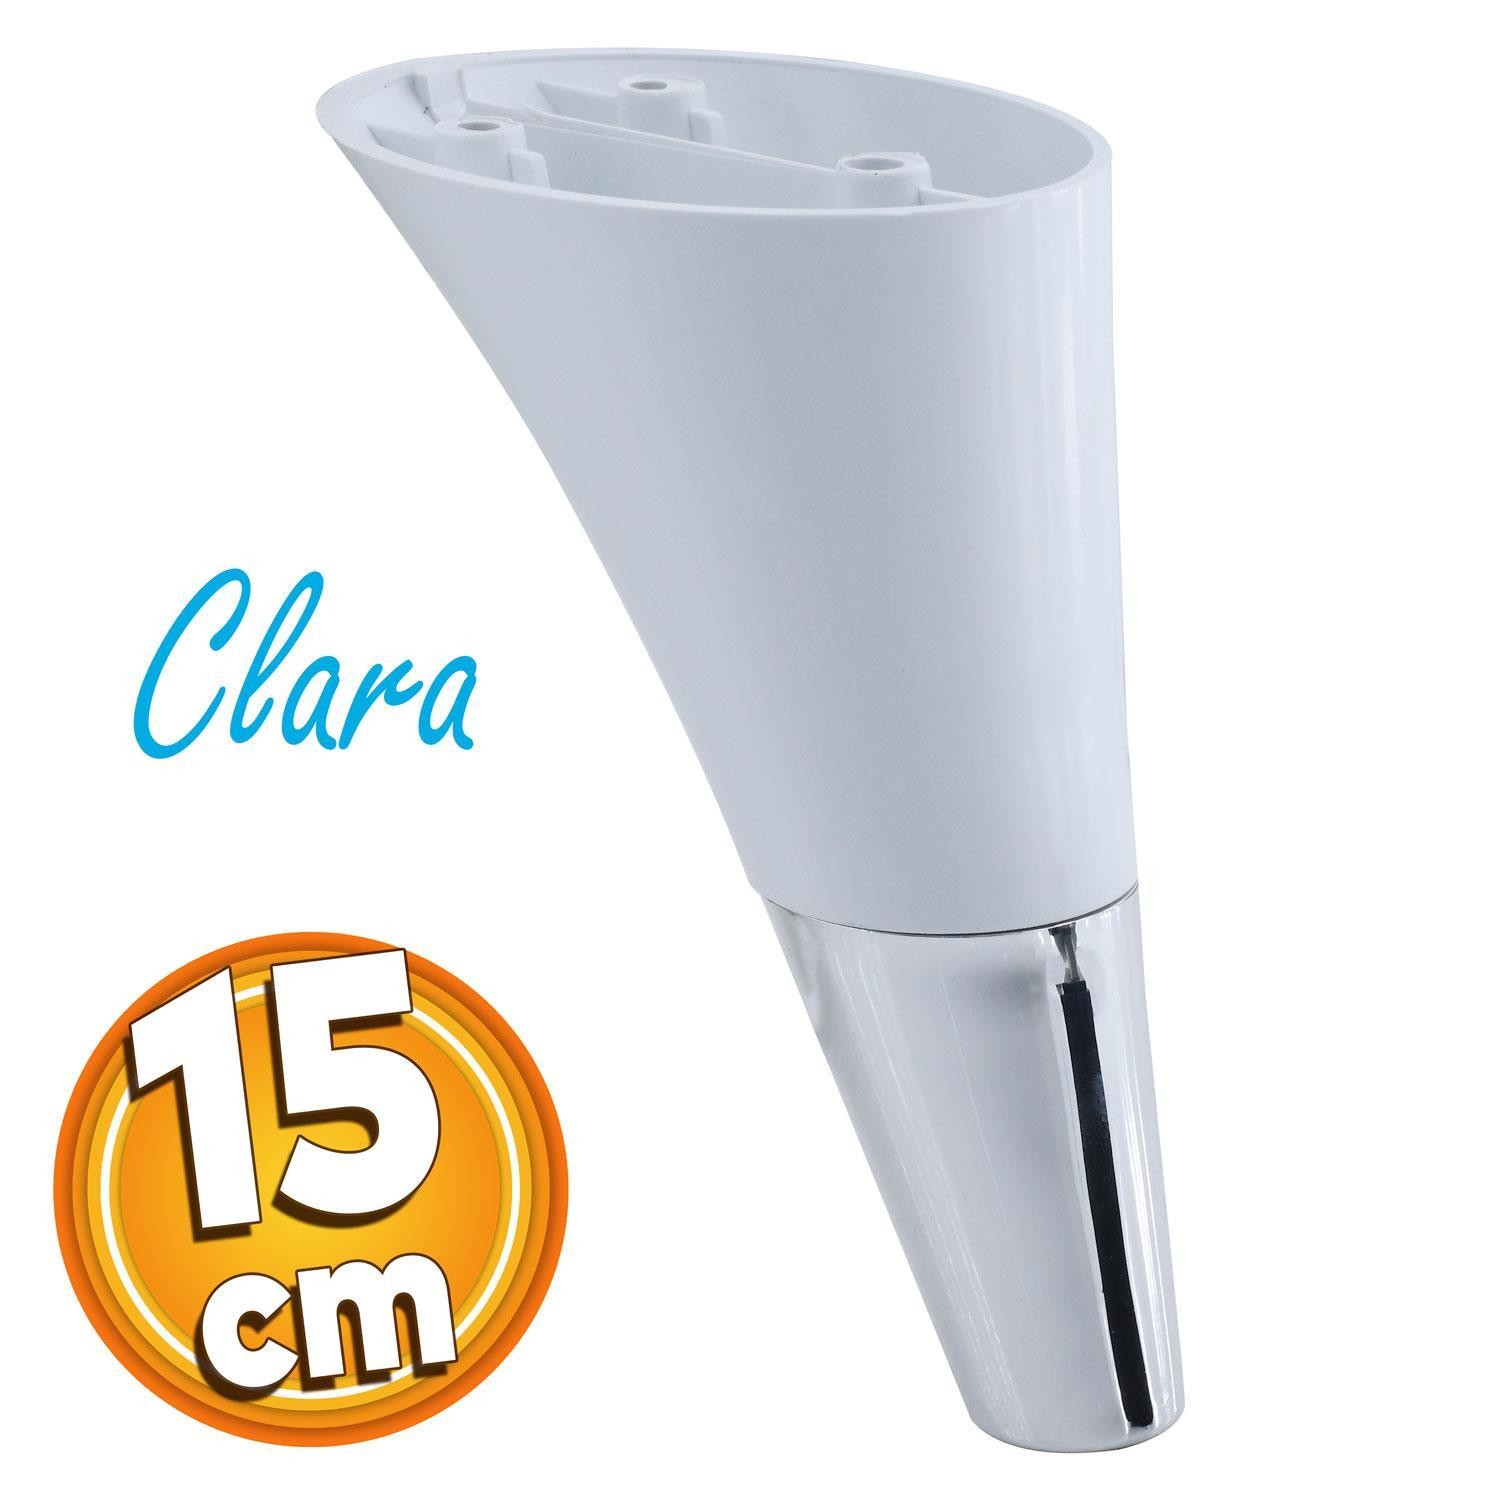 Clara Mobilya Kanepe Sehpa TV Ünitesi Baza Koltuk Ayağı Beyaz Krom Renk 15 cm (4 Adet)